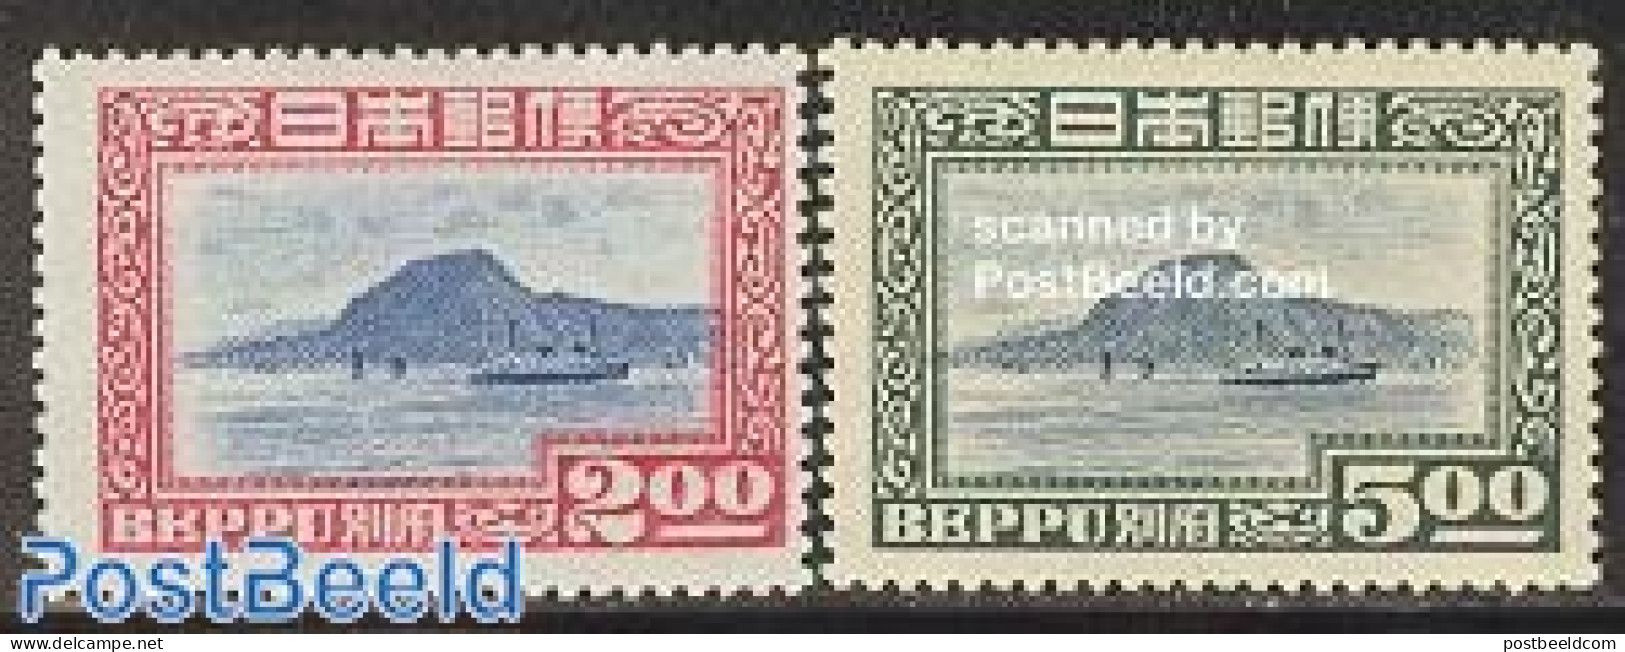 Japan 1949 Beppu 2v, Mint NH, Transport - Ships And Boats - Ungebraucht